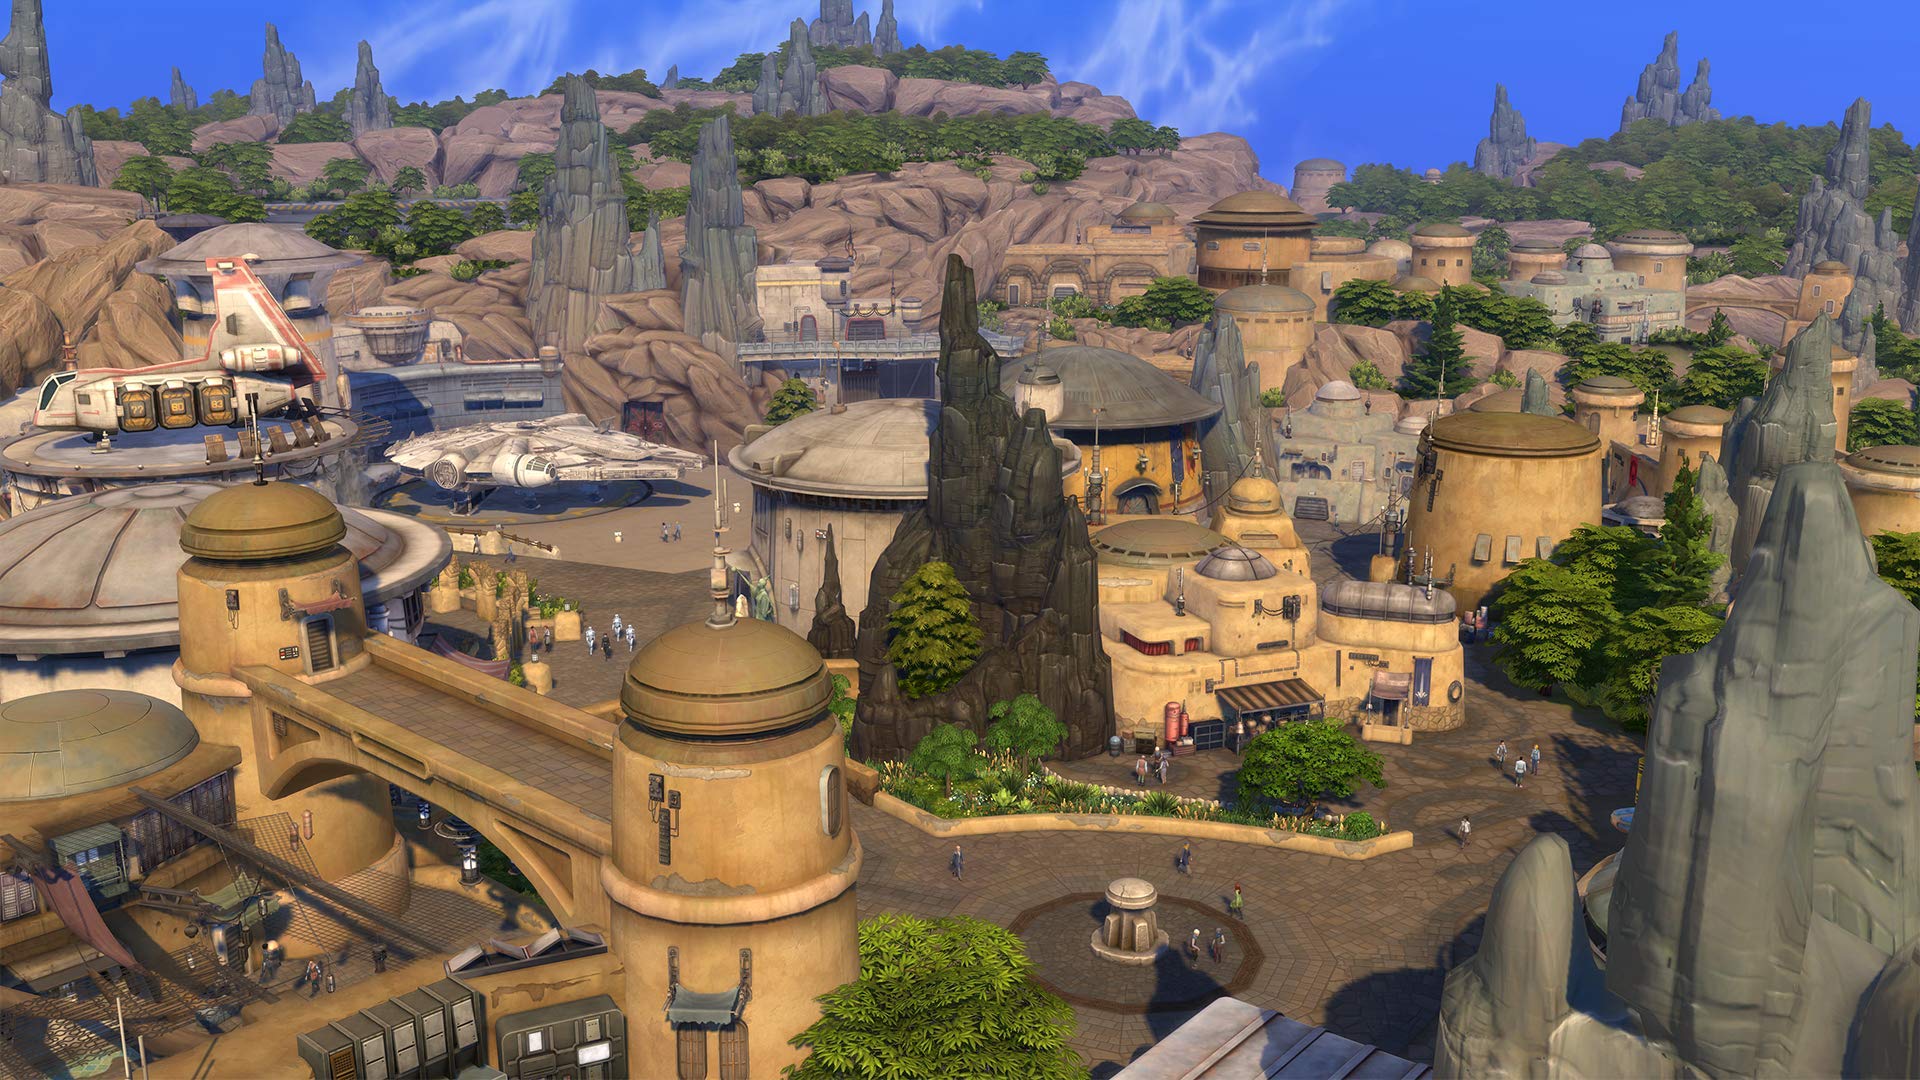 The Sims 4 - Star Wars Journey to Batuu - Origin PC [Online Game Code]